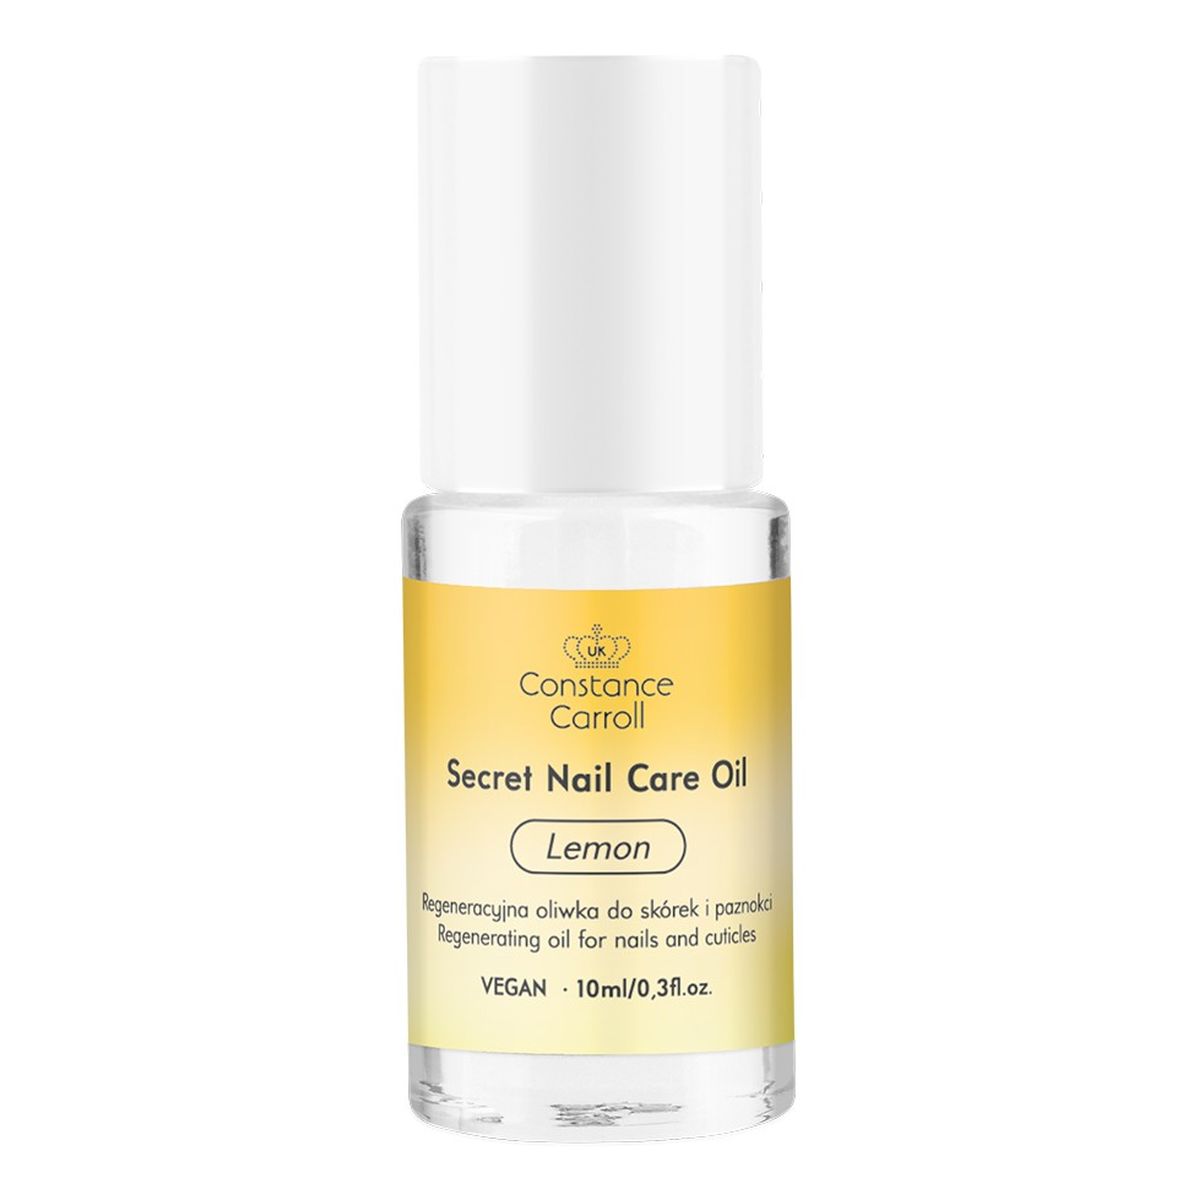 Constance Carroll Secret Nail Care Oil Regeneracyjna Oliwka do skórek i paznokci - Lemon 10ml